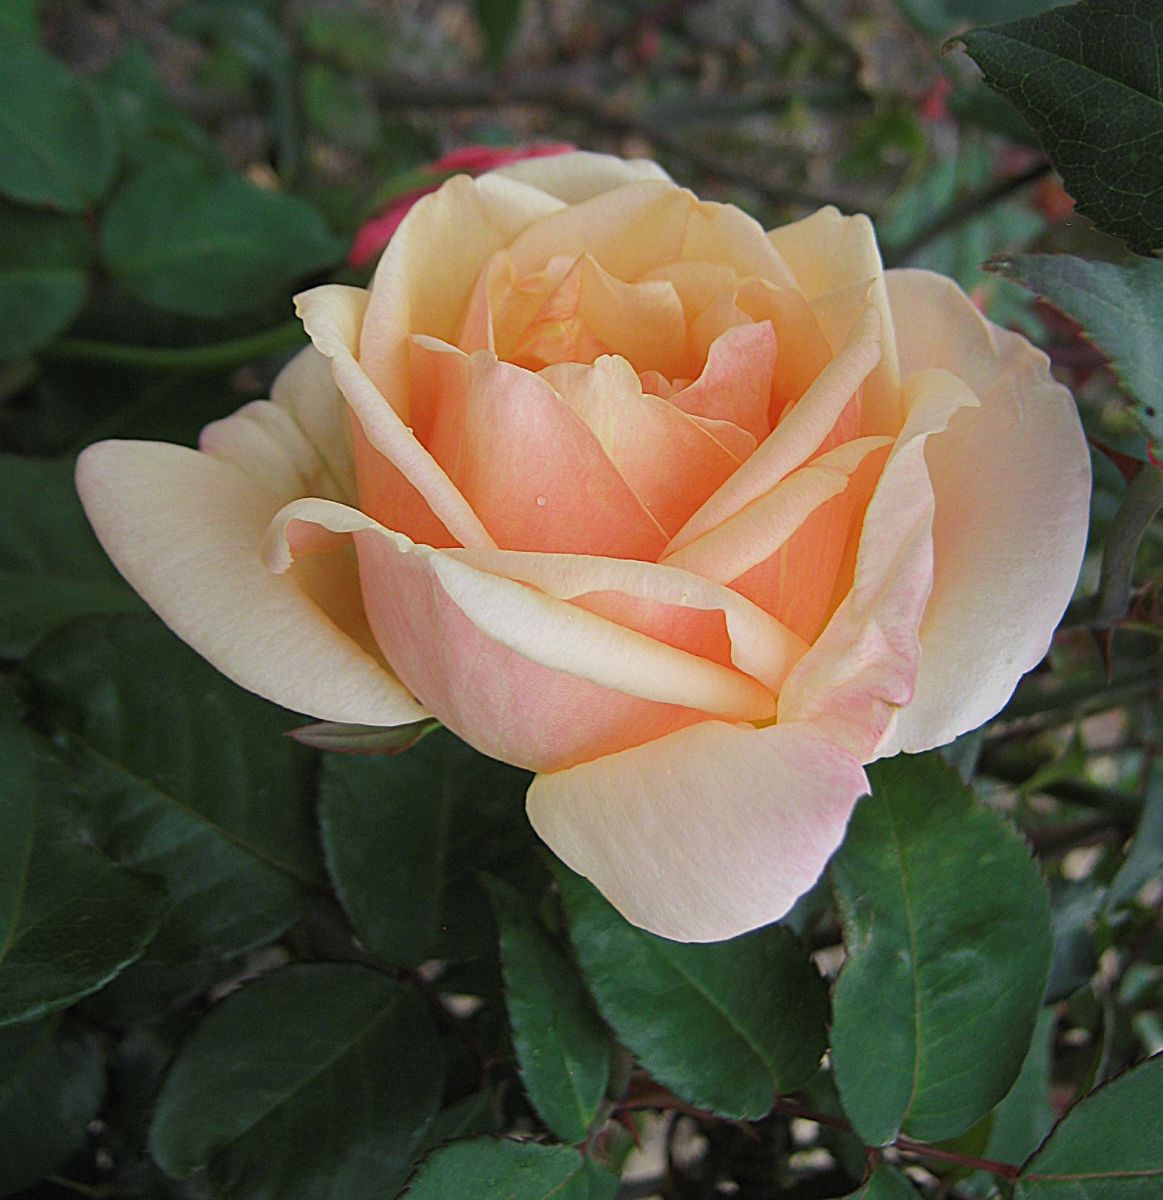 Lorraine Lee rose photographed at the Alister Clark Memorial Rose Garden